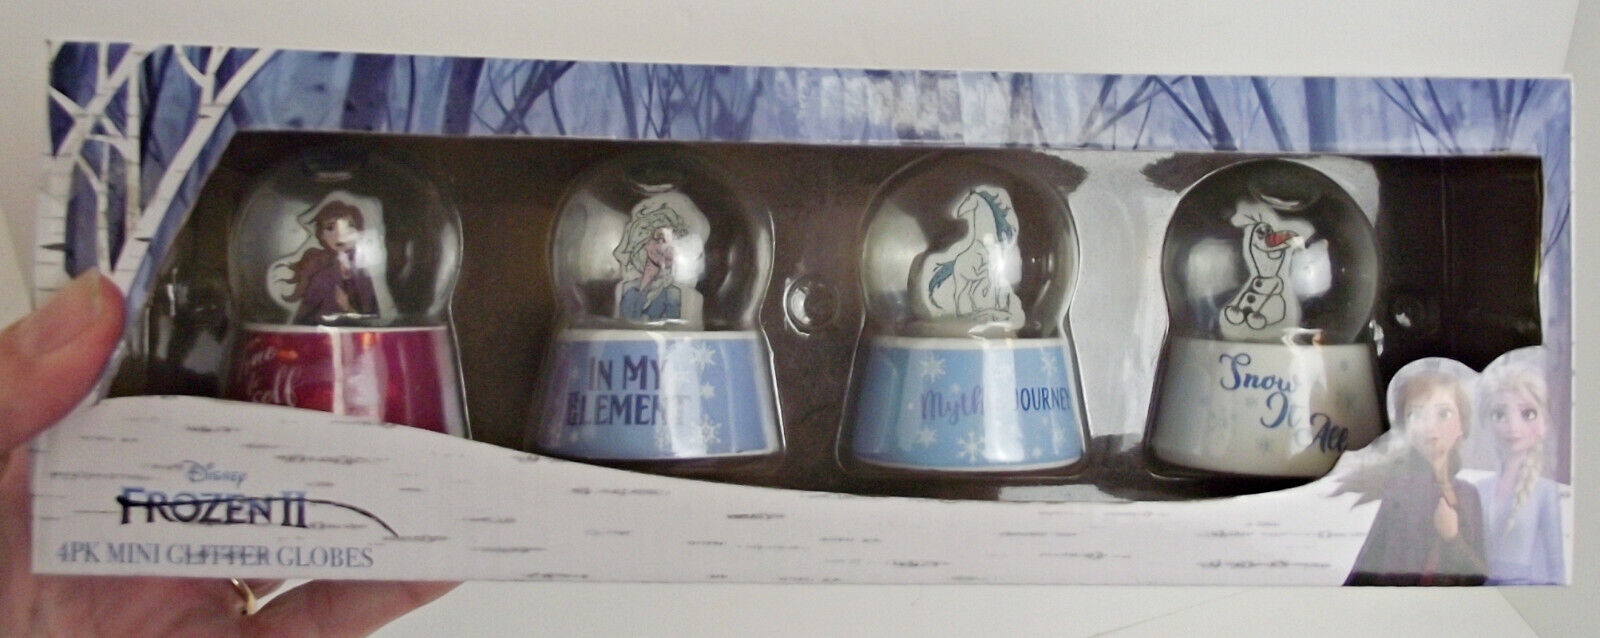 BRAND NEW SEALED Disney Frozen II 4 Pk Glitter Globes